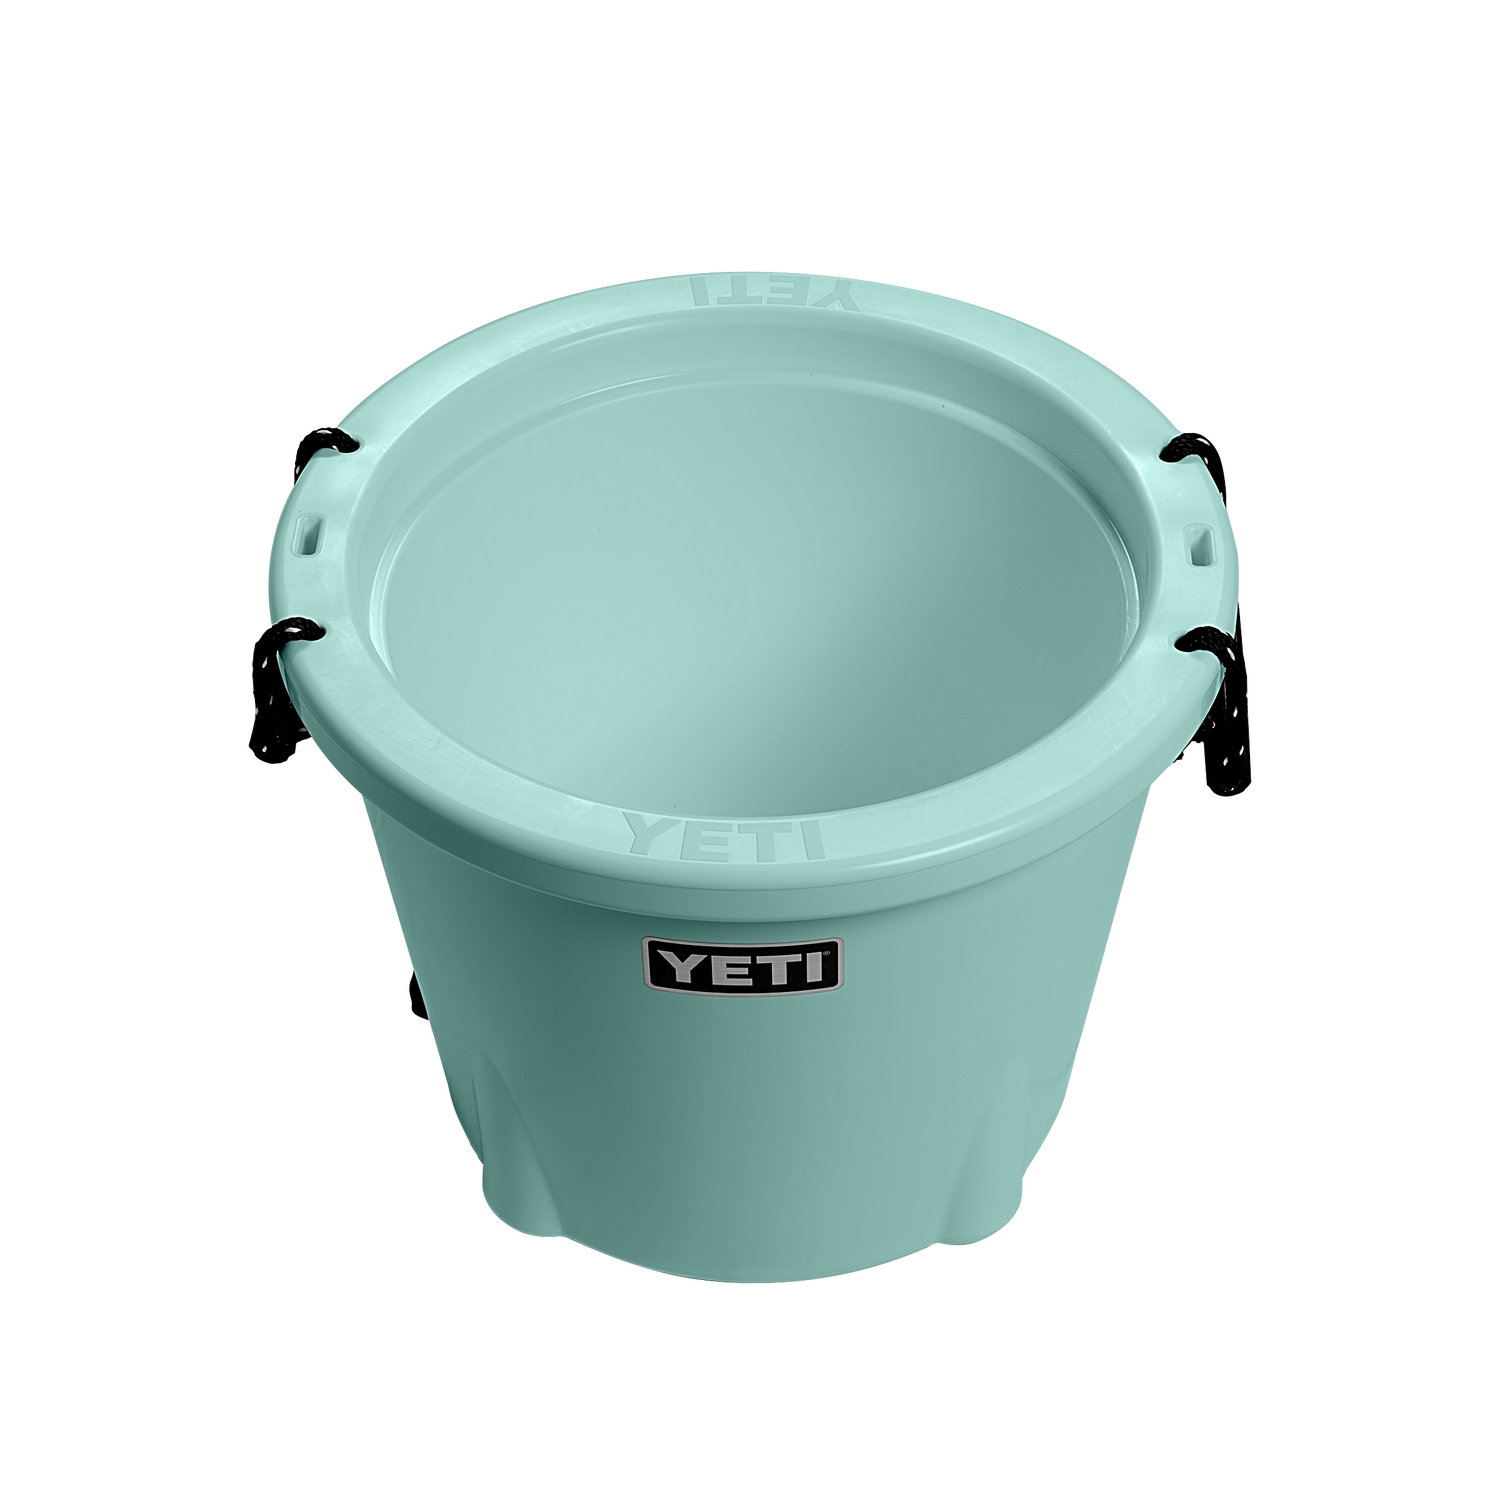 YETI YETI Tank® 45 Insulated Ice Bucket Sea Foam